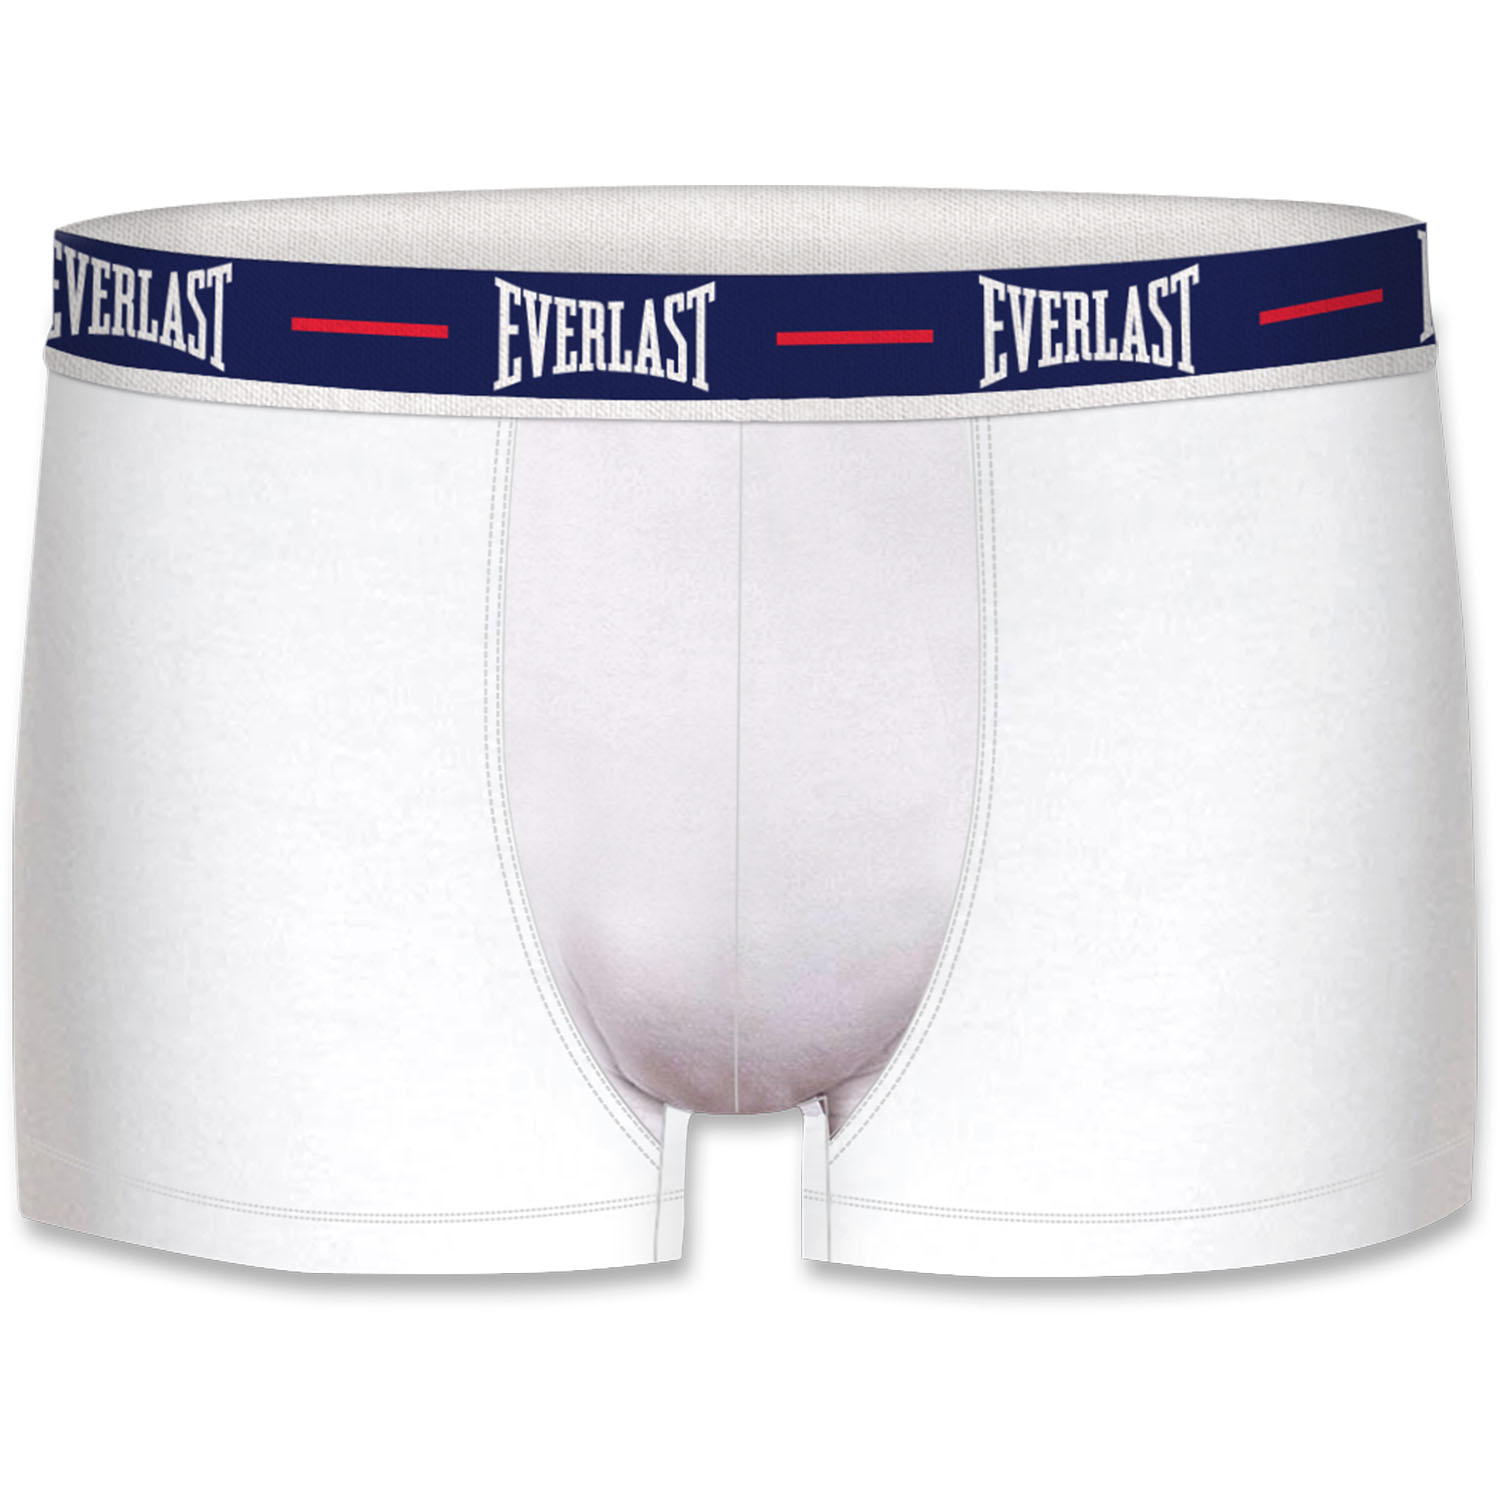 Everlast Boxershorts, AS1, weiß